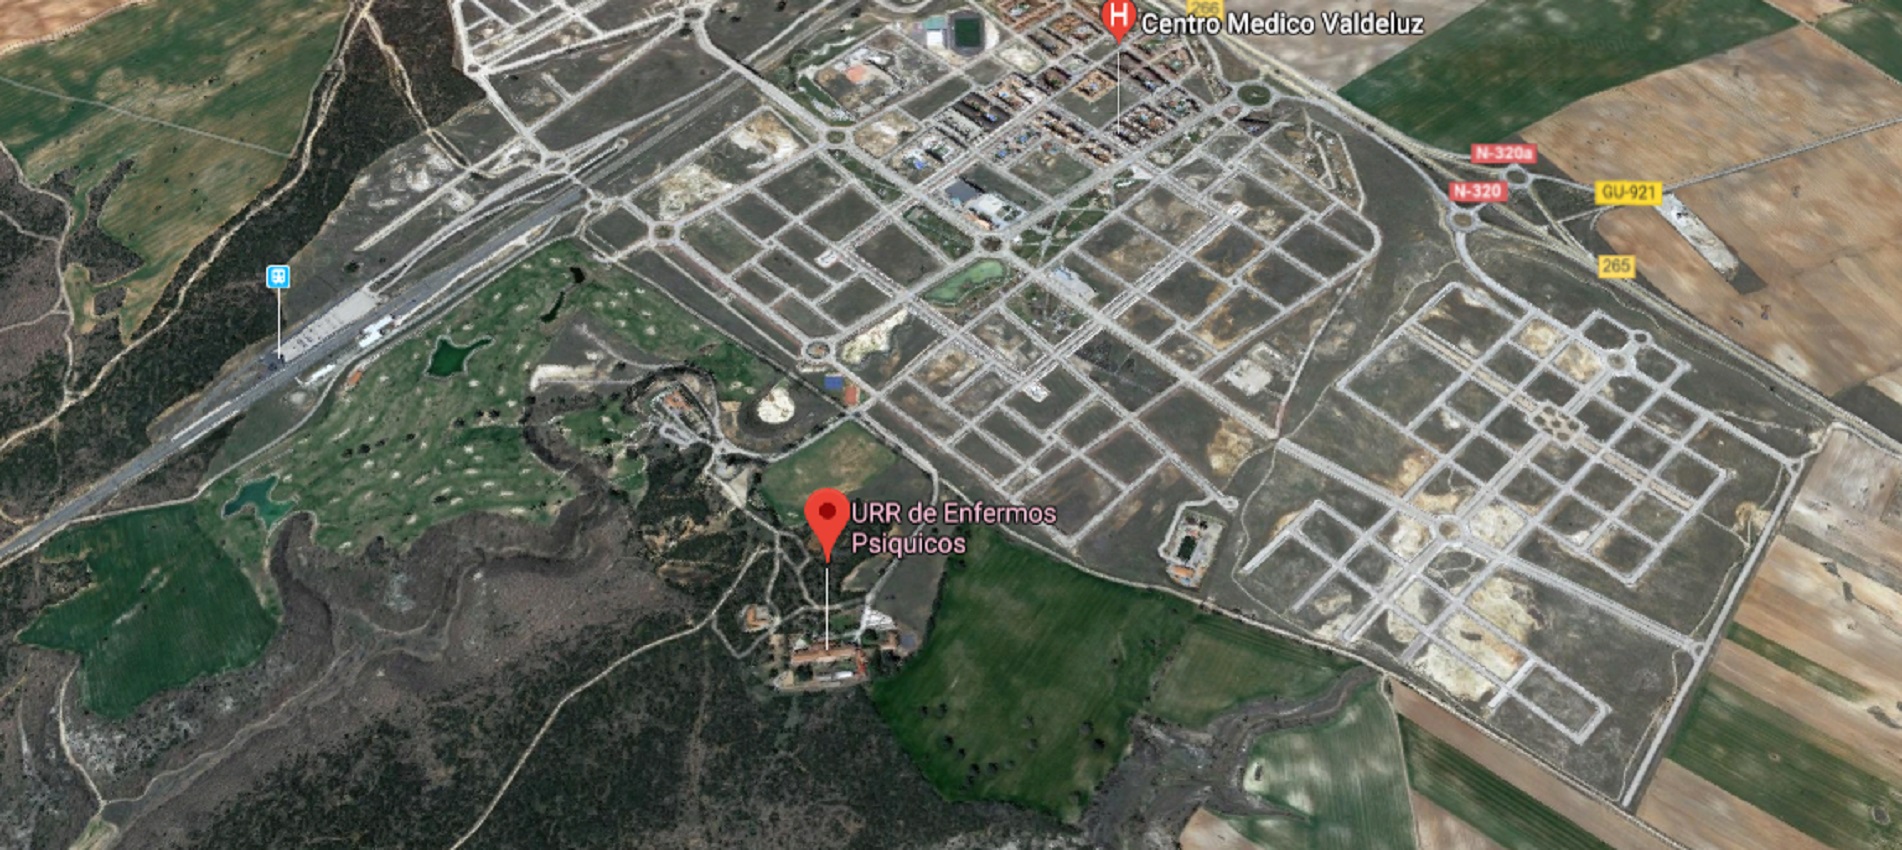 valdeluz Imagen de Google Maps del Hospital Psiquiátrico de Yebes.